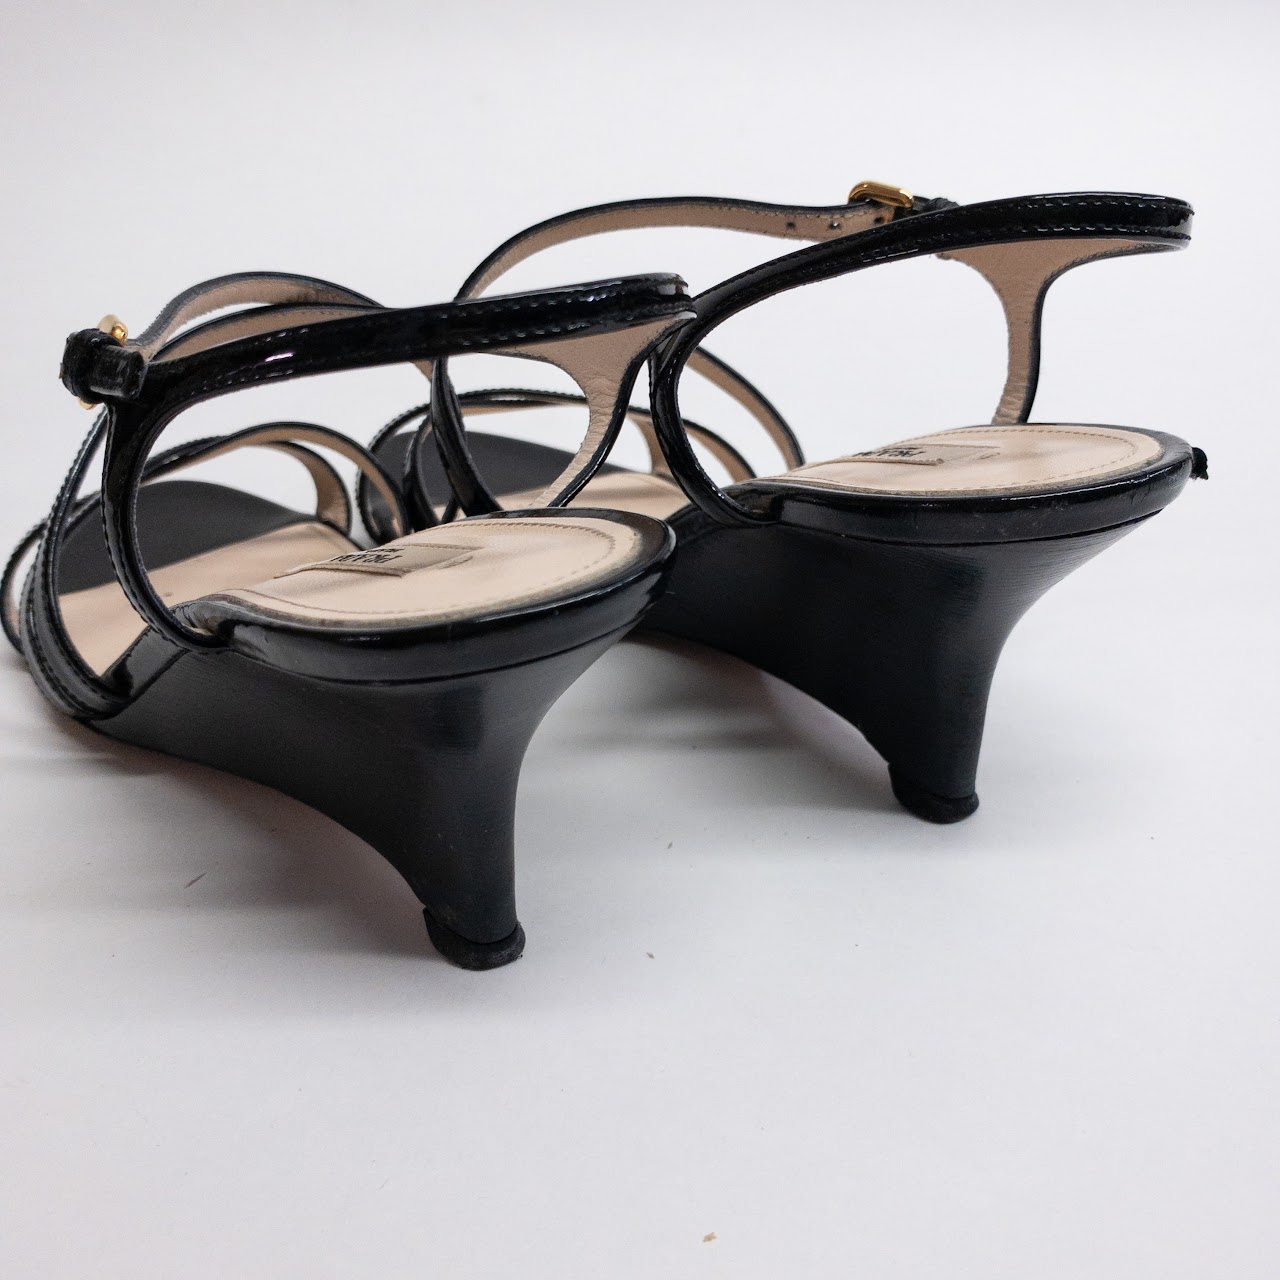 Prada Patent Leather Wedge Sandals